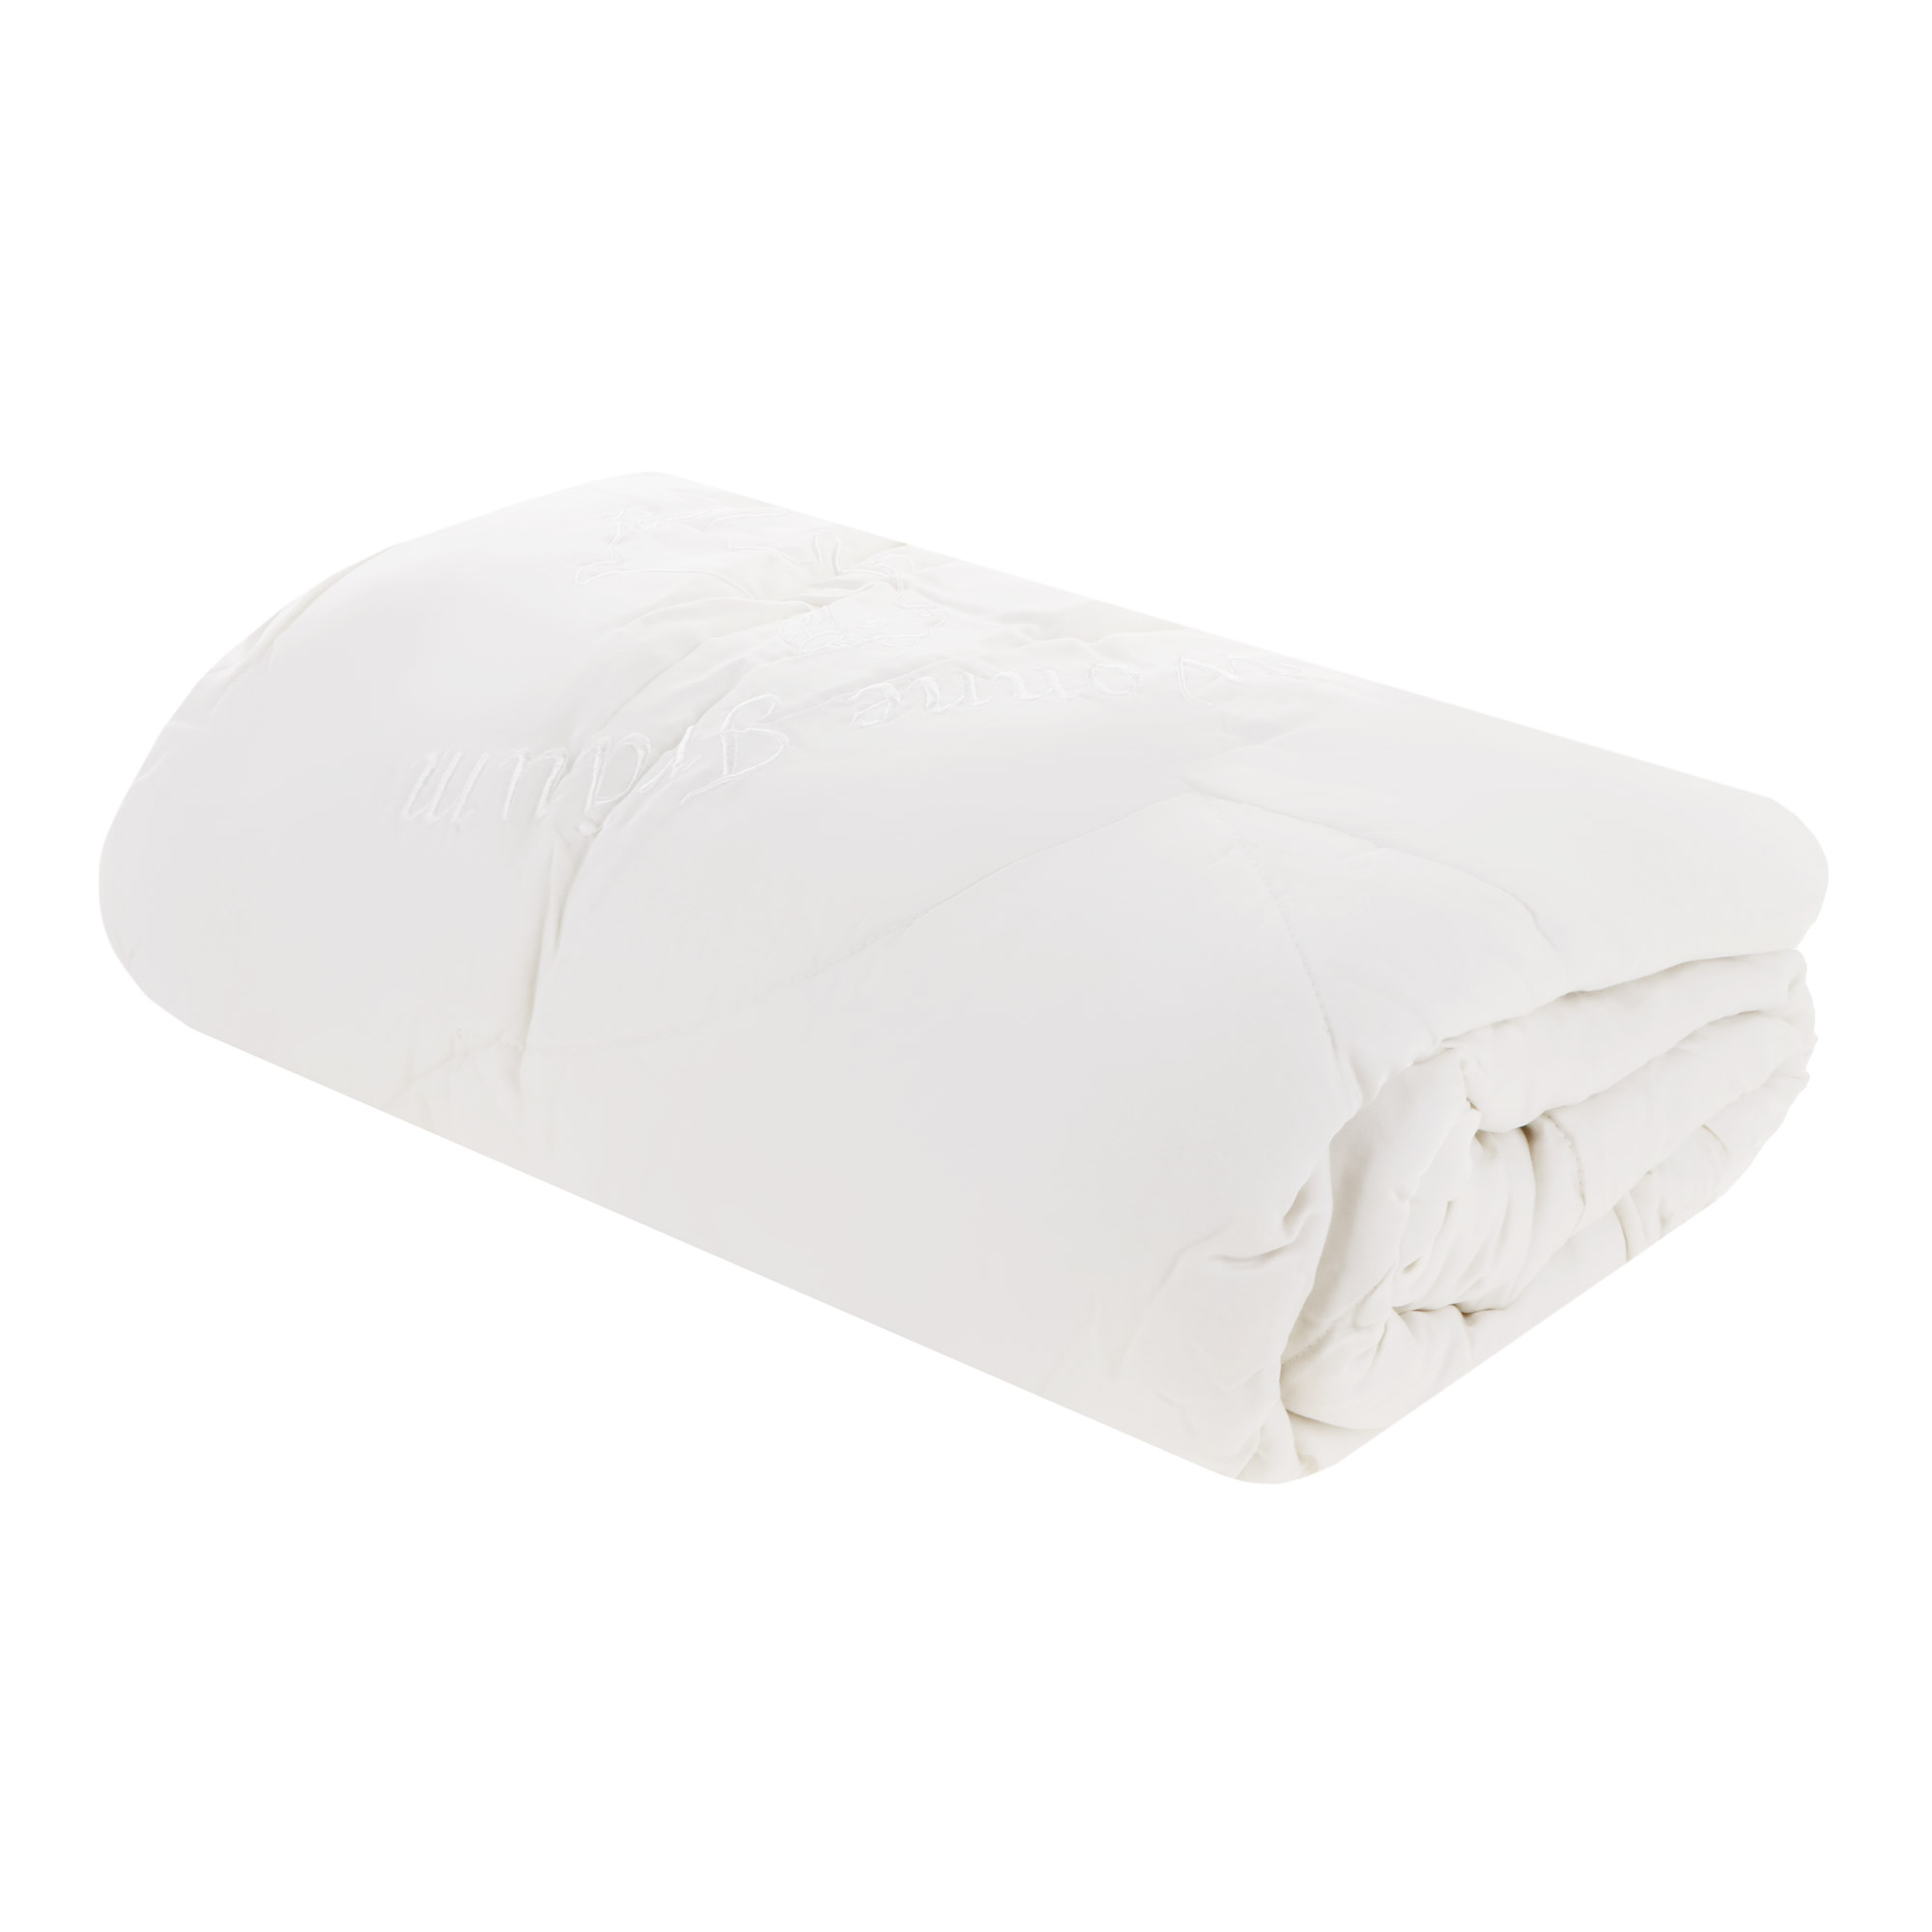 Одеяло Wonne Traum Lux Line 220 х 240 см, размер 220 х 240 см